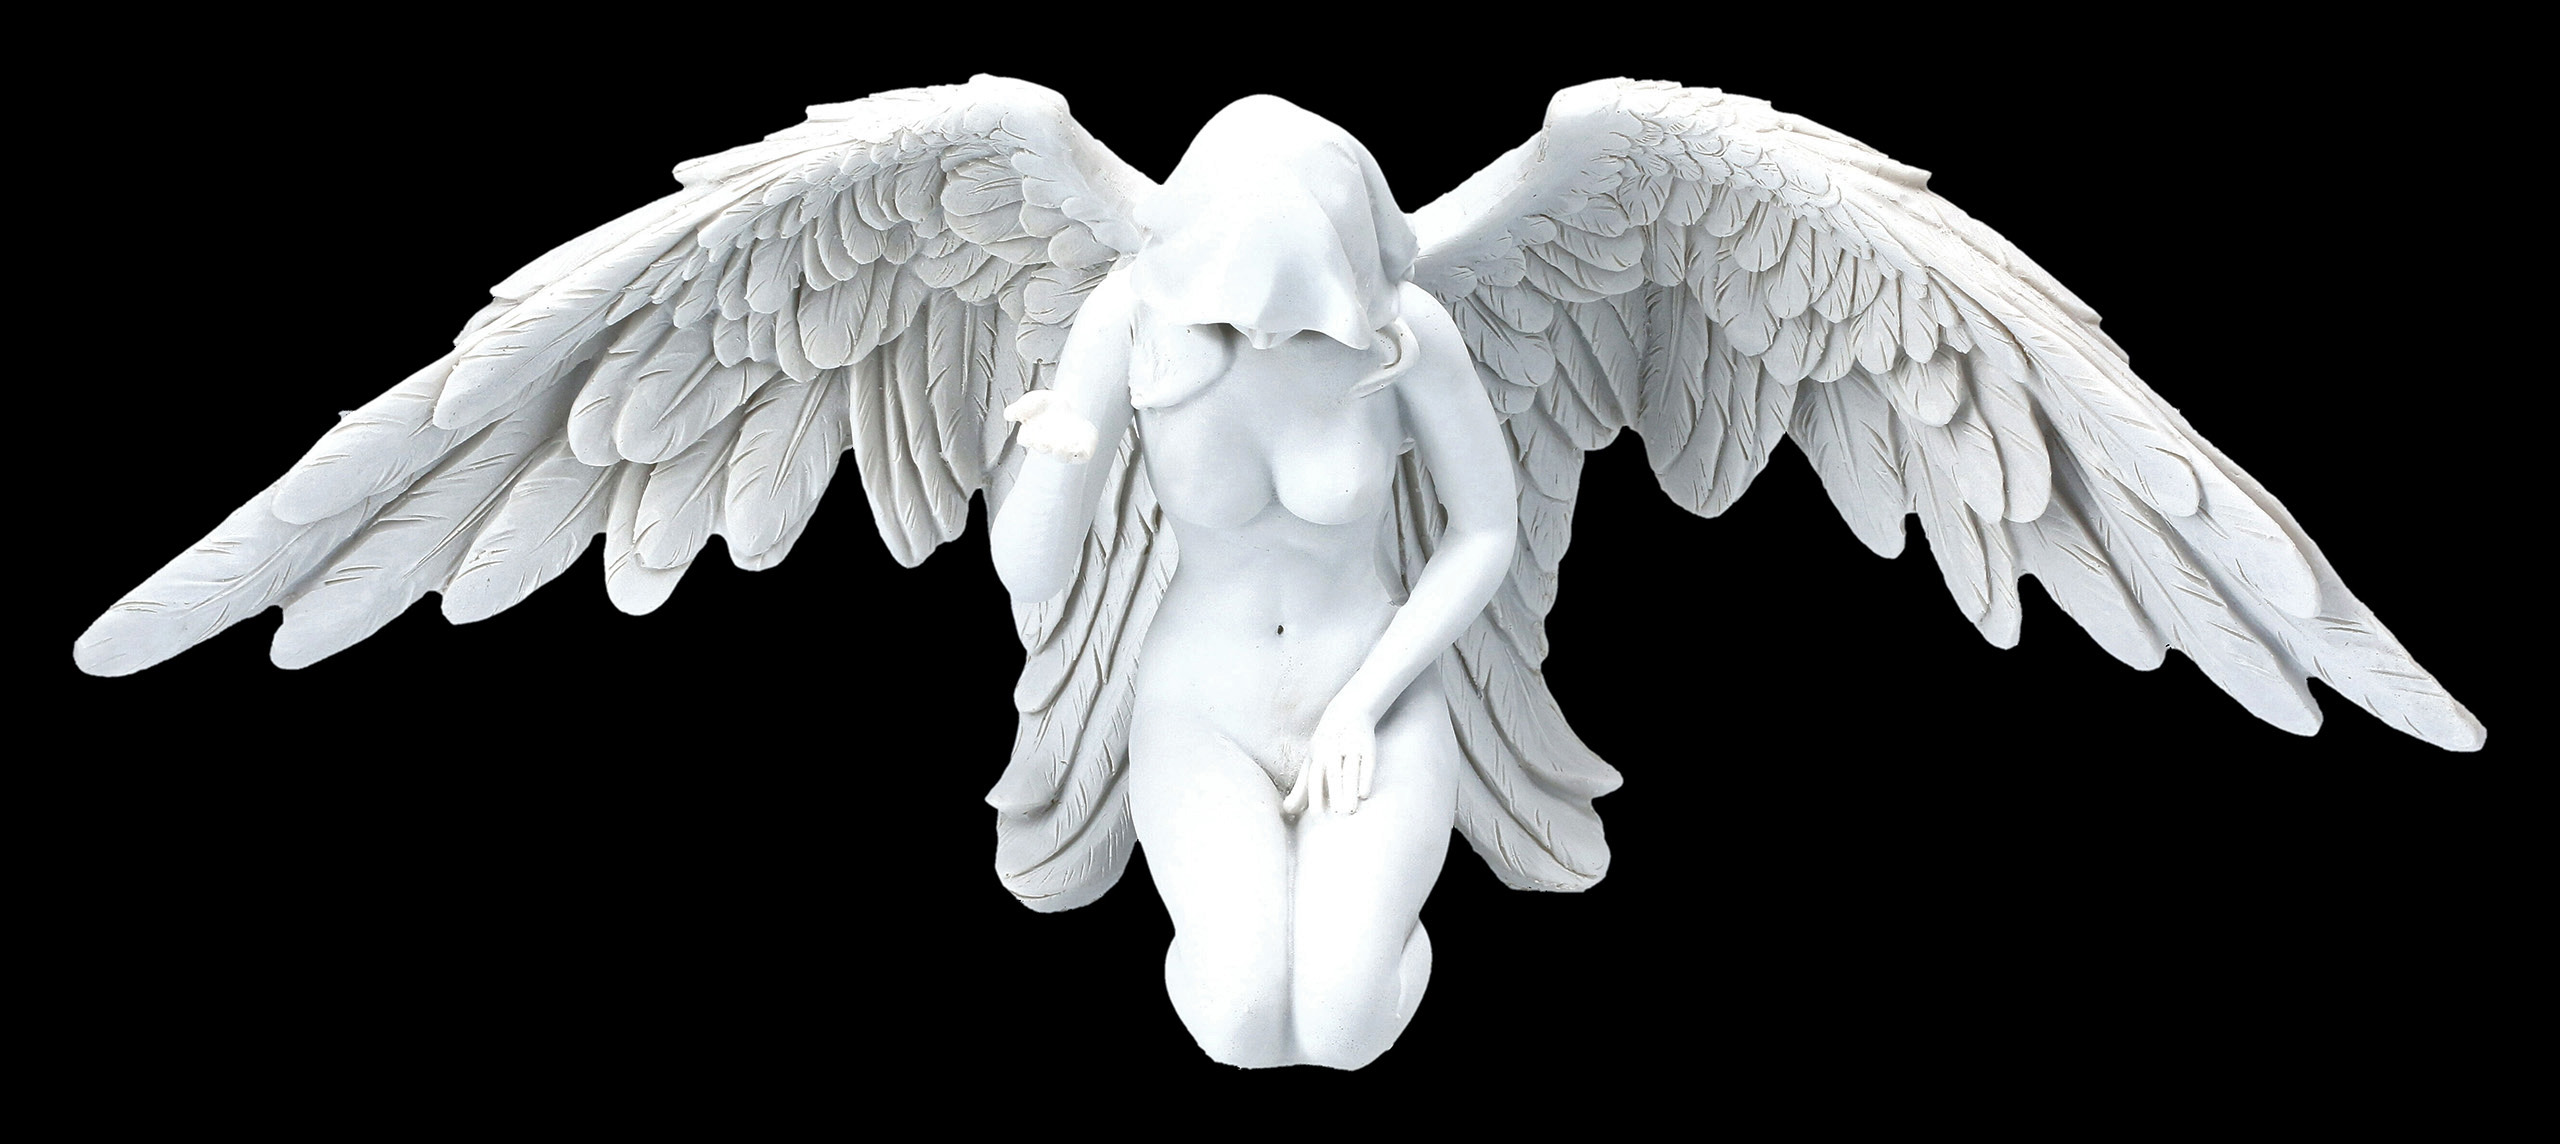 White Angel Figurine Sitting Down On The Black Background